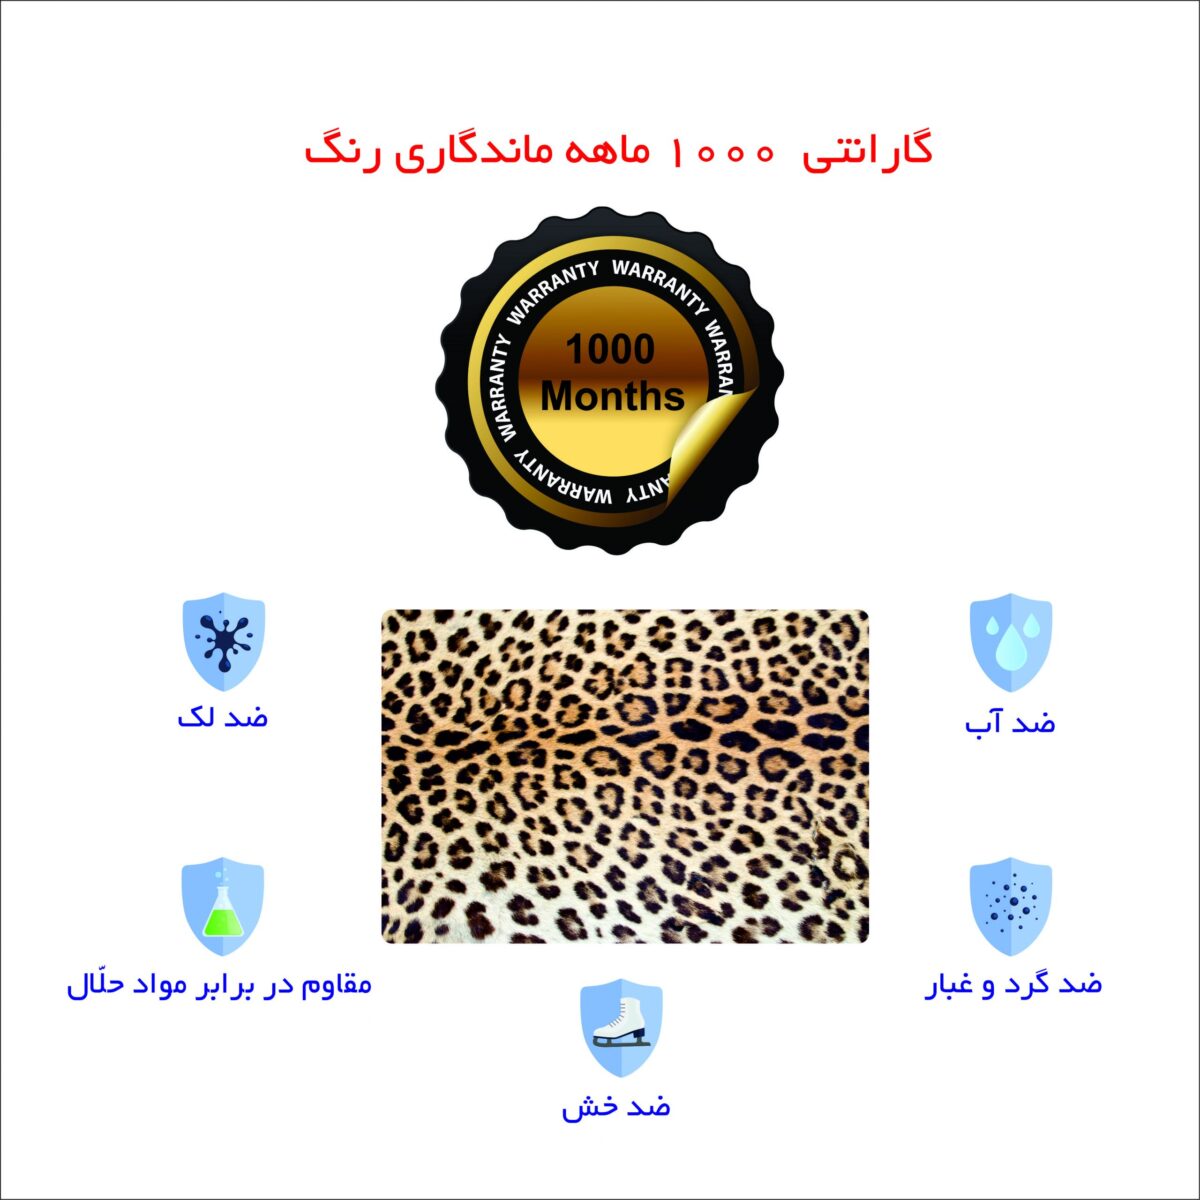 Leopard-design-laptop-skin-ar01-with-sticker-tmjeenir-min-scaled.jpg